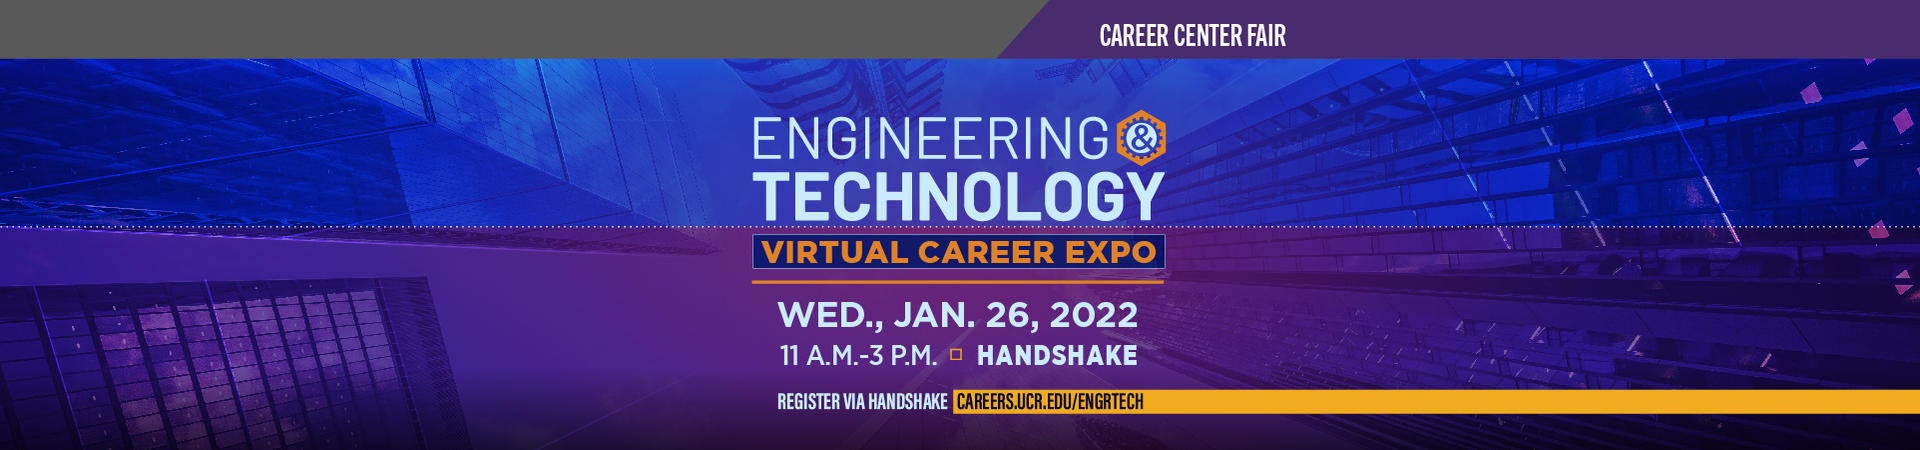 Engineering & Technology Virtual Career Expo, Wed., Jan. 26, 2022, 11am-3pm via Handshake